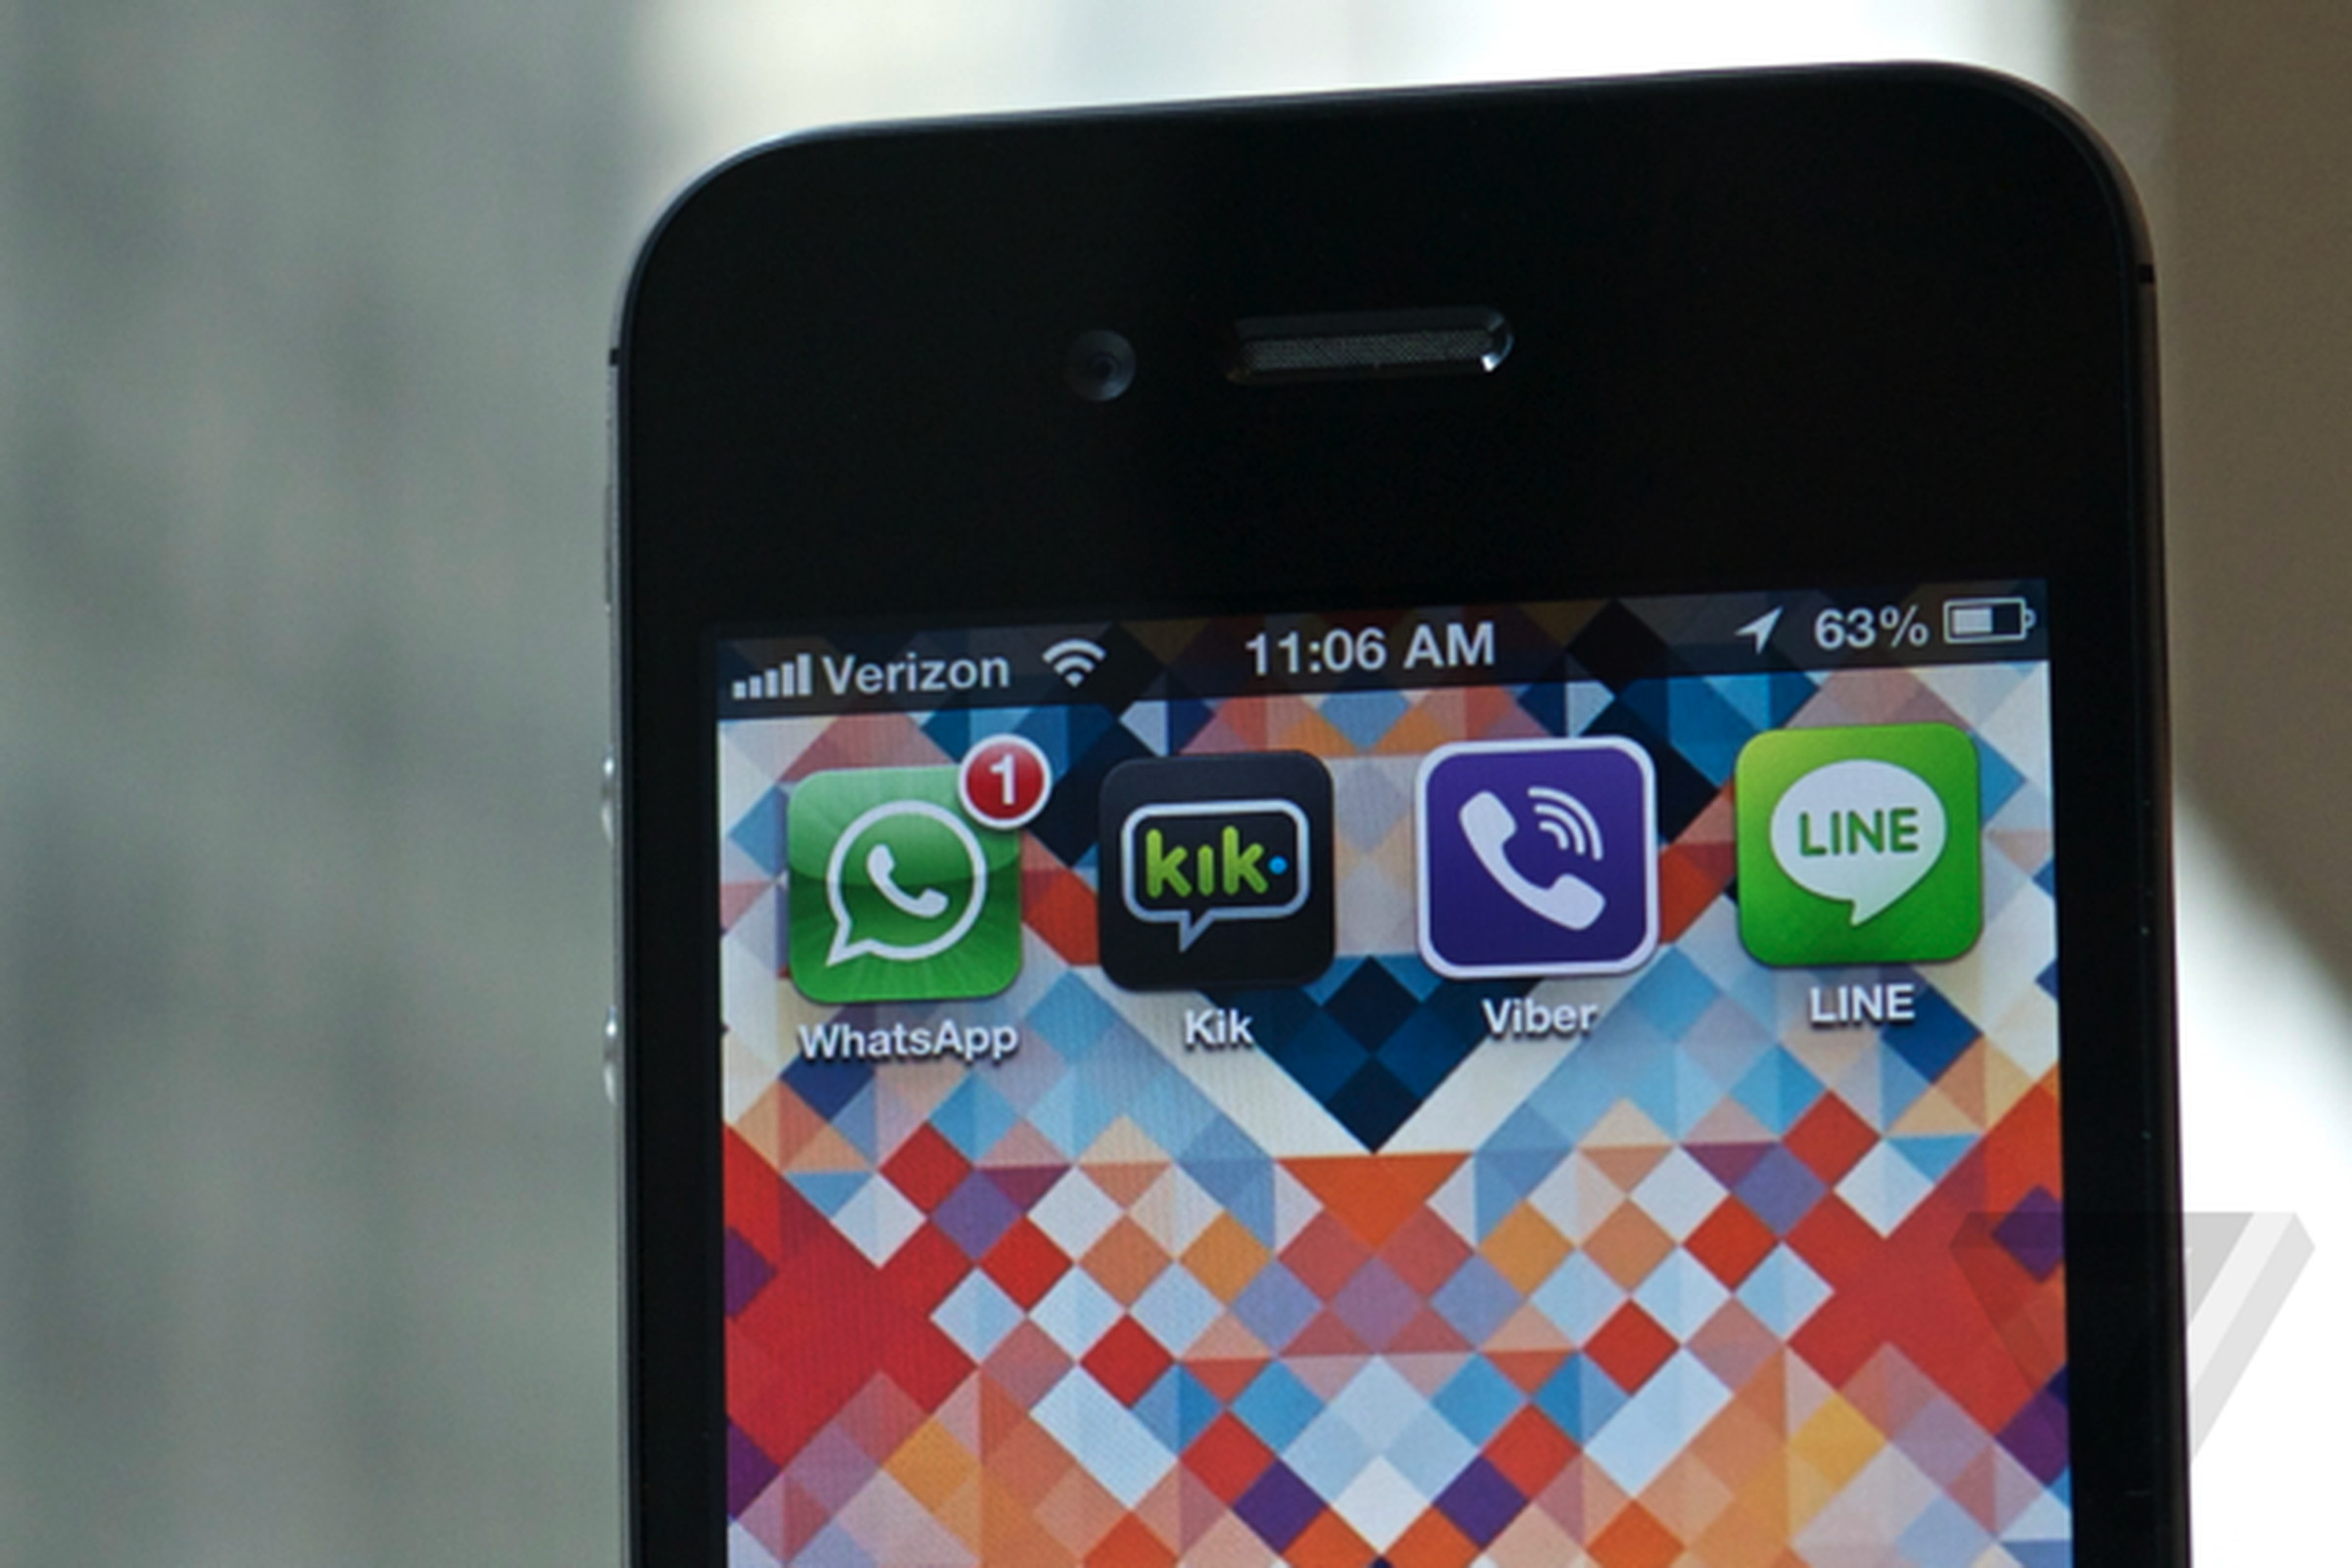 messaging apps whatsapp line viber kik